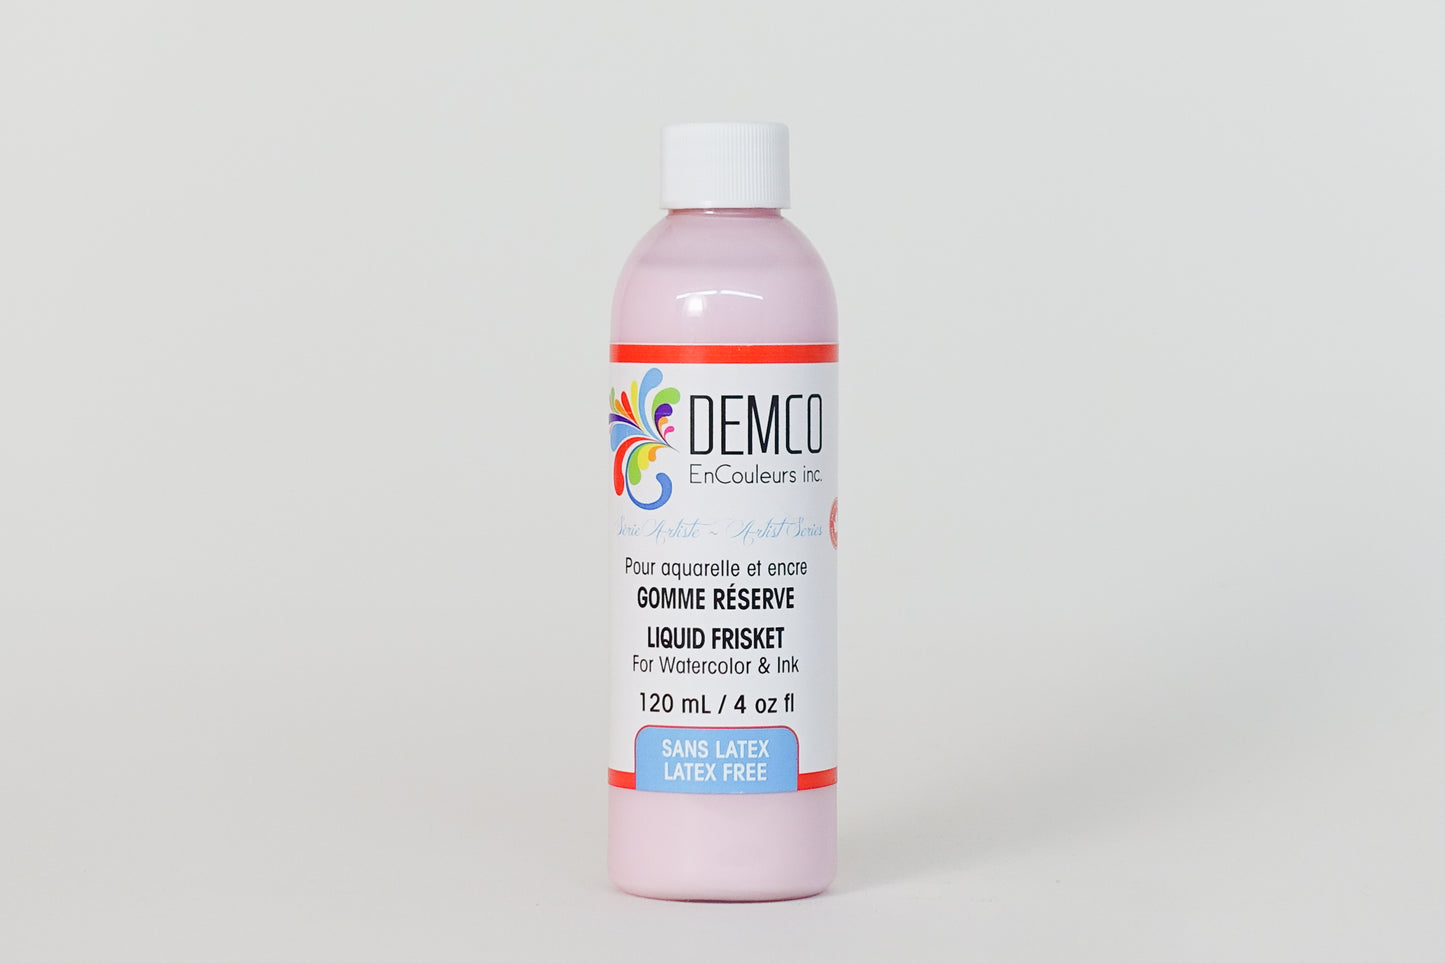 Liquid Frisket (Latex-Free) - Demco EnCouleurs Inc.